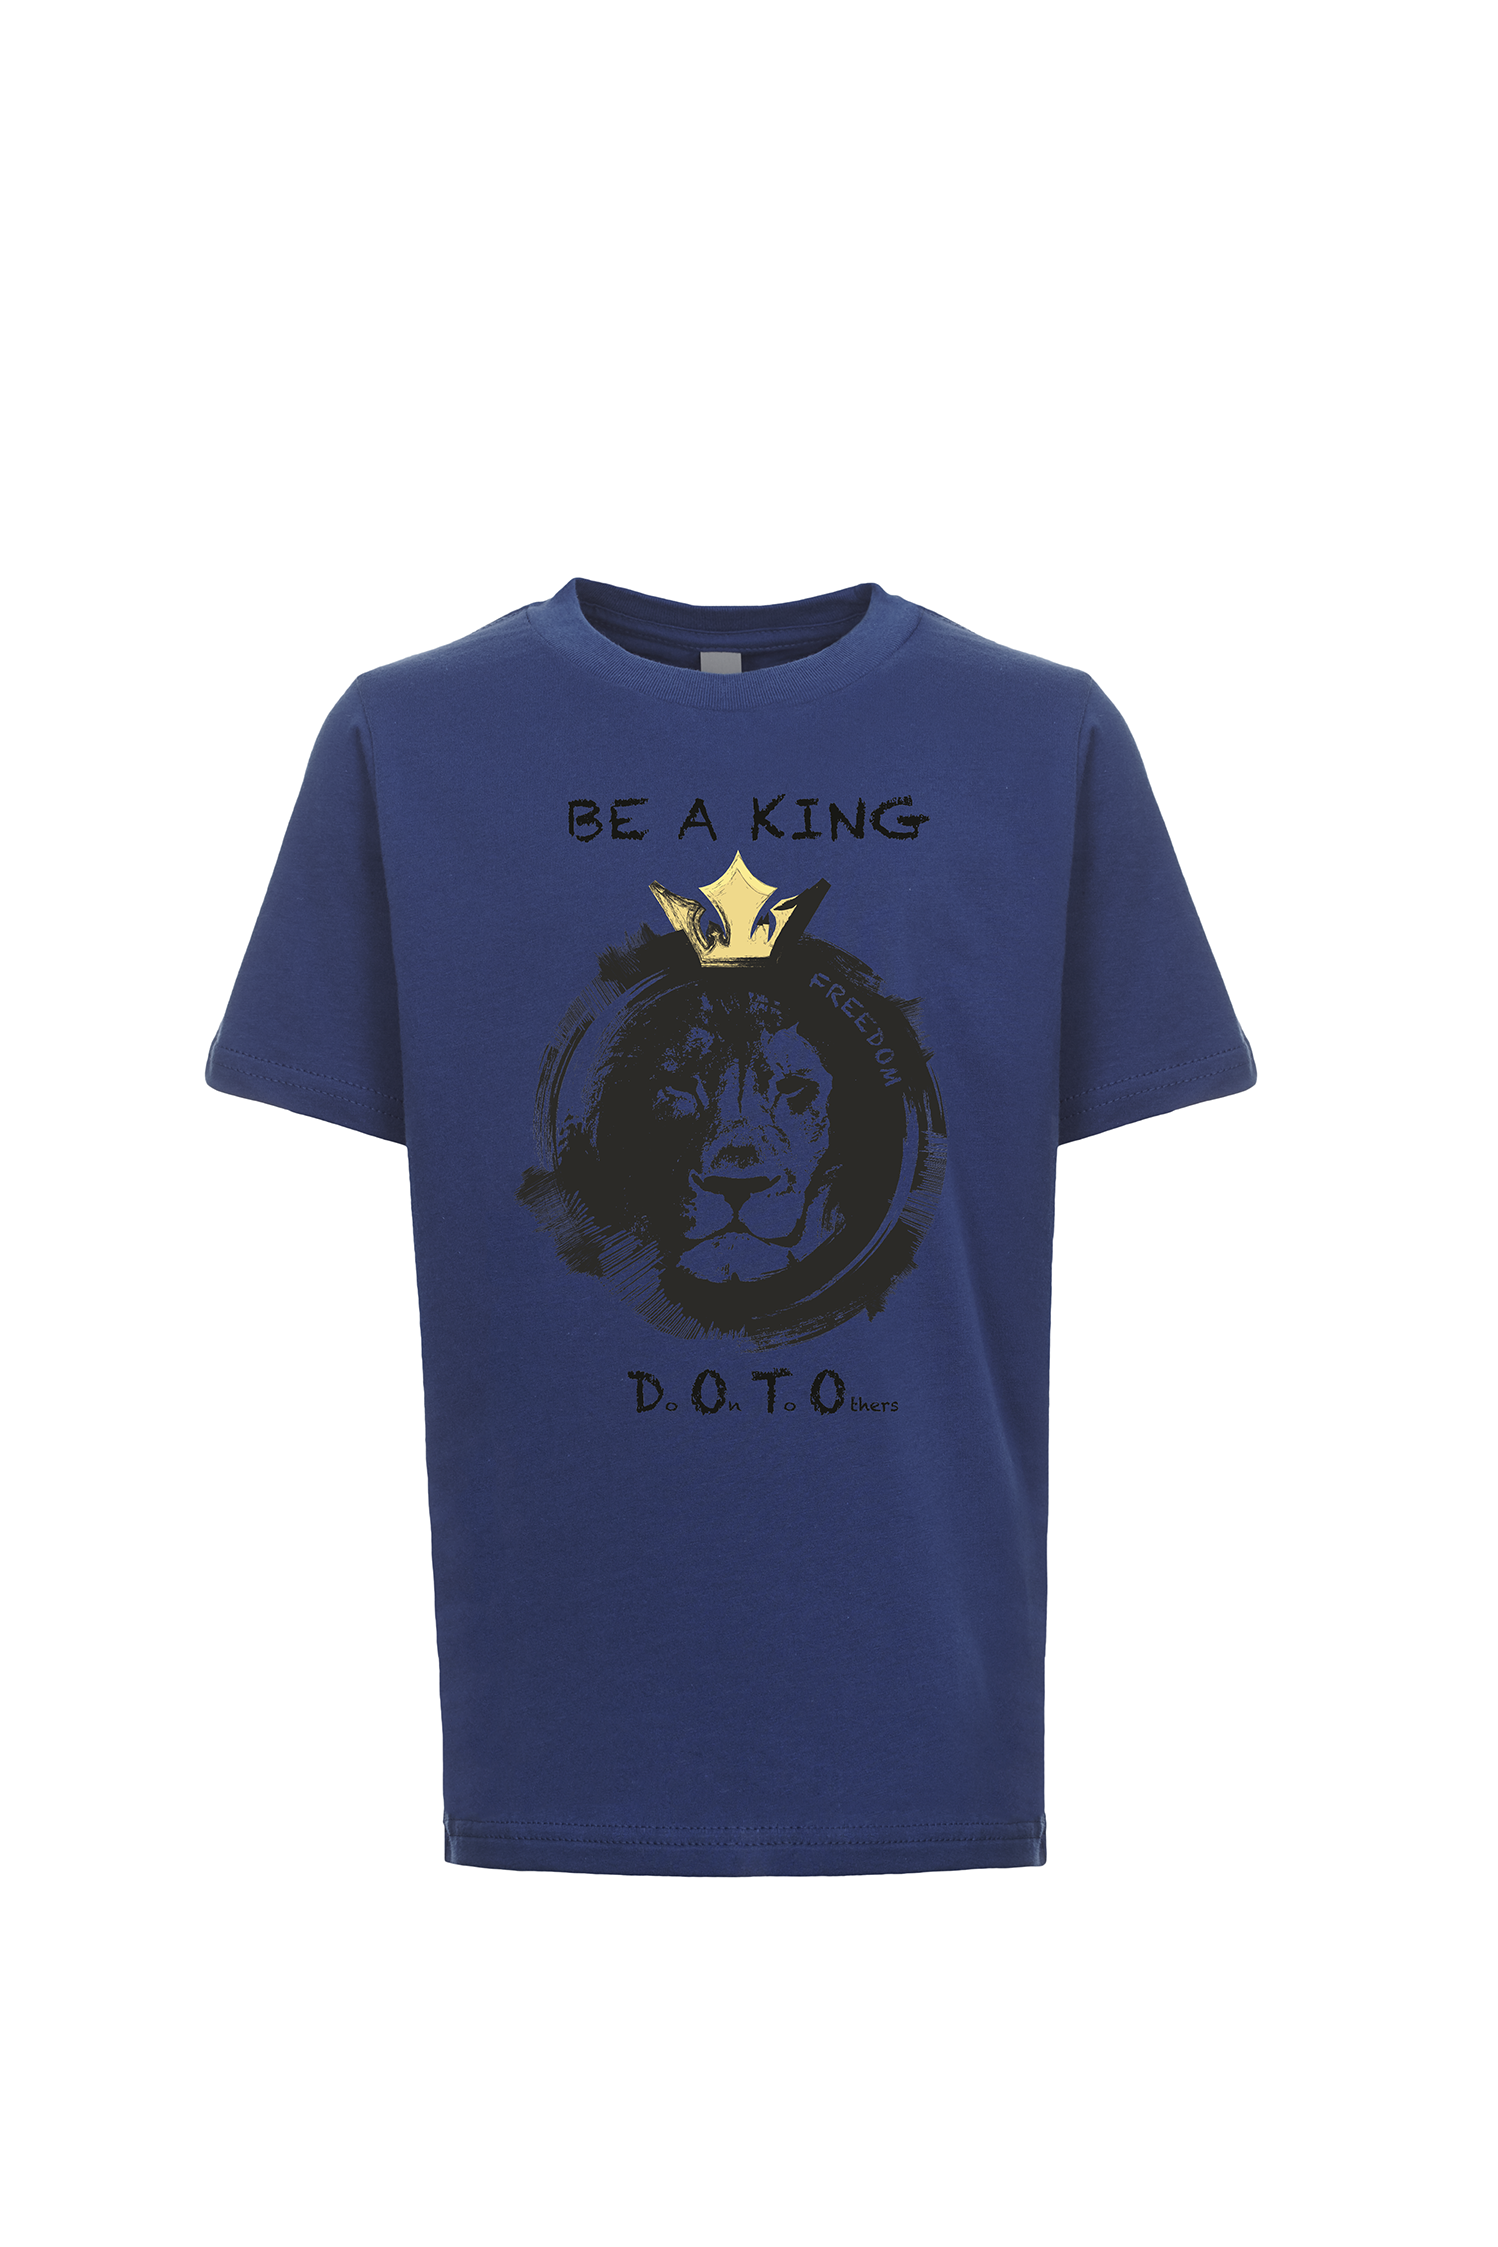 Be A King - Blue Boy's short sleeve Tee